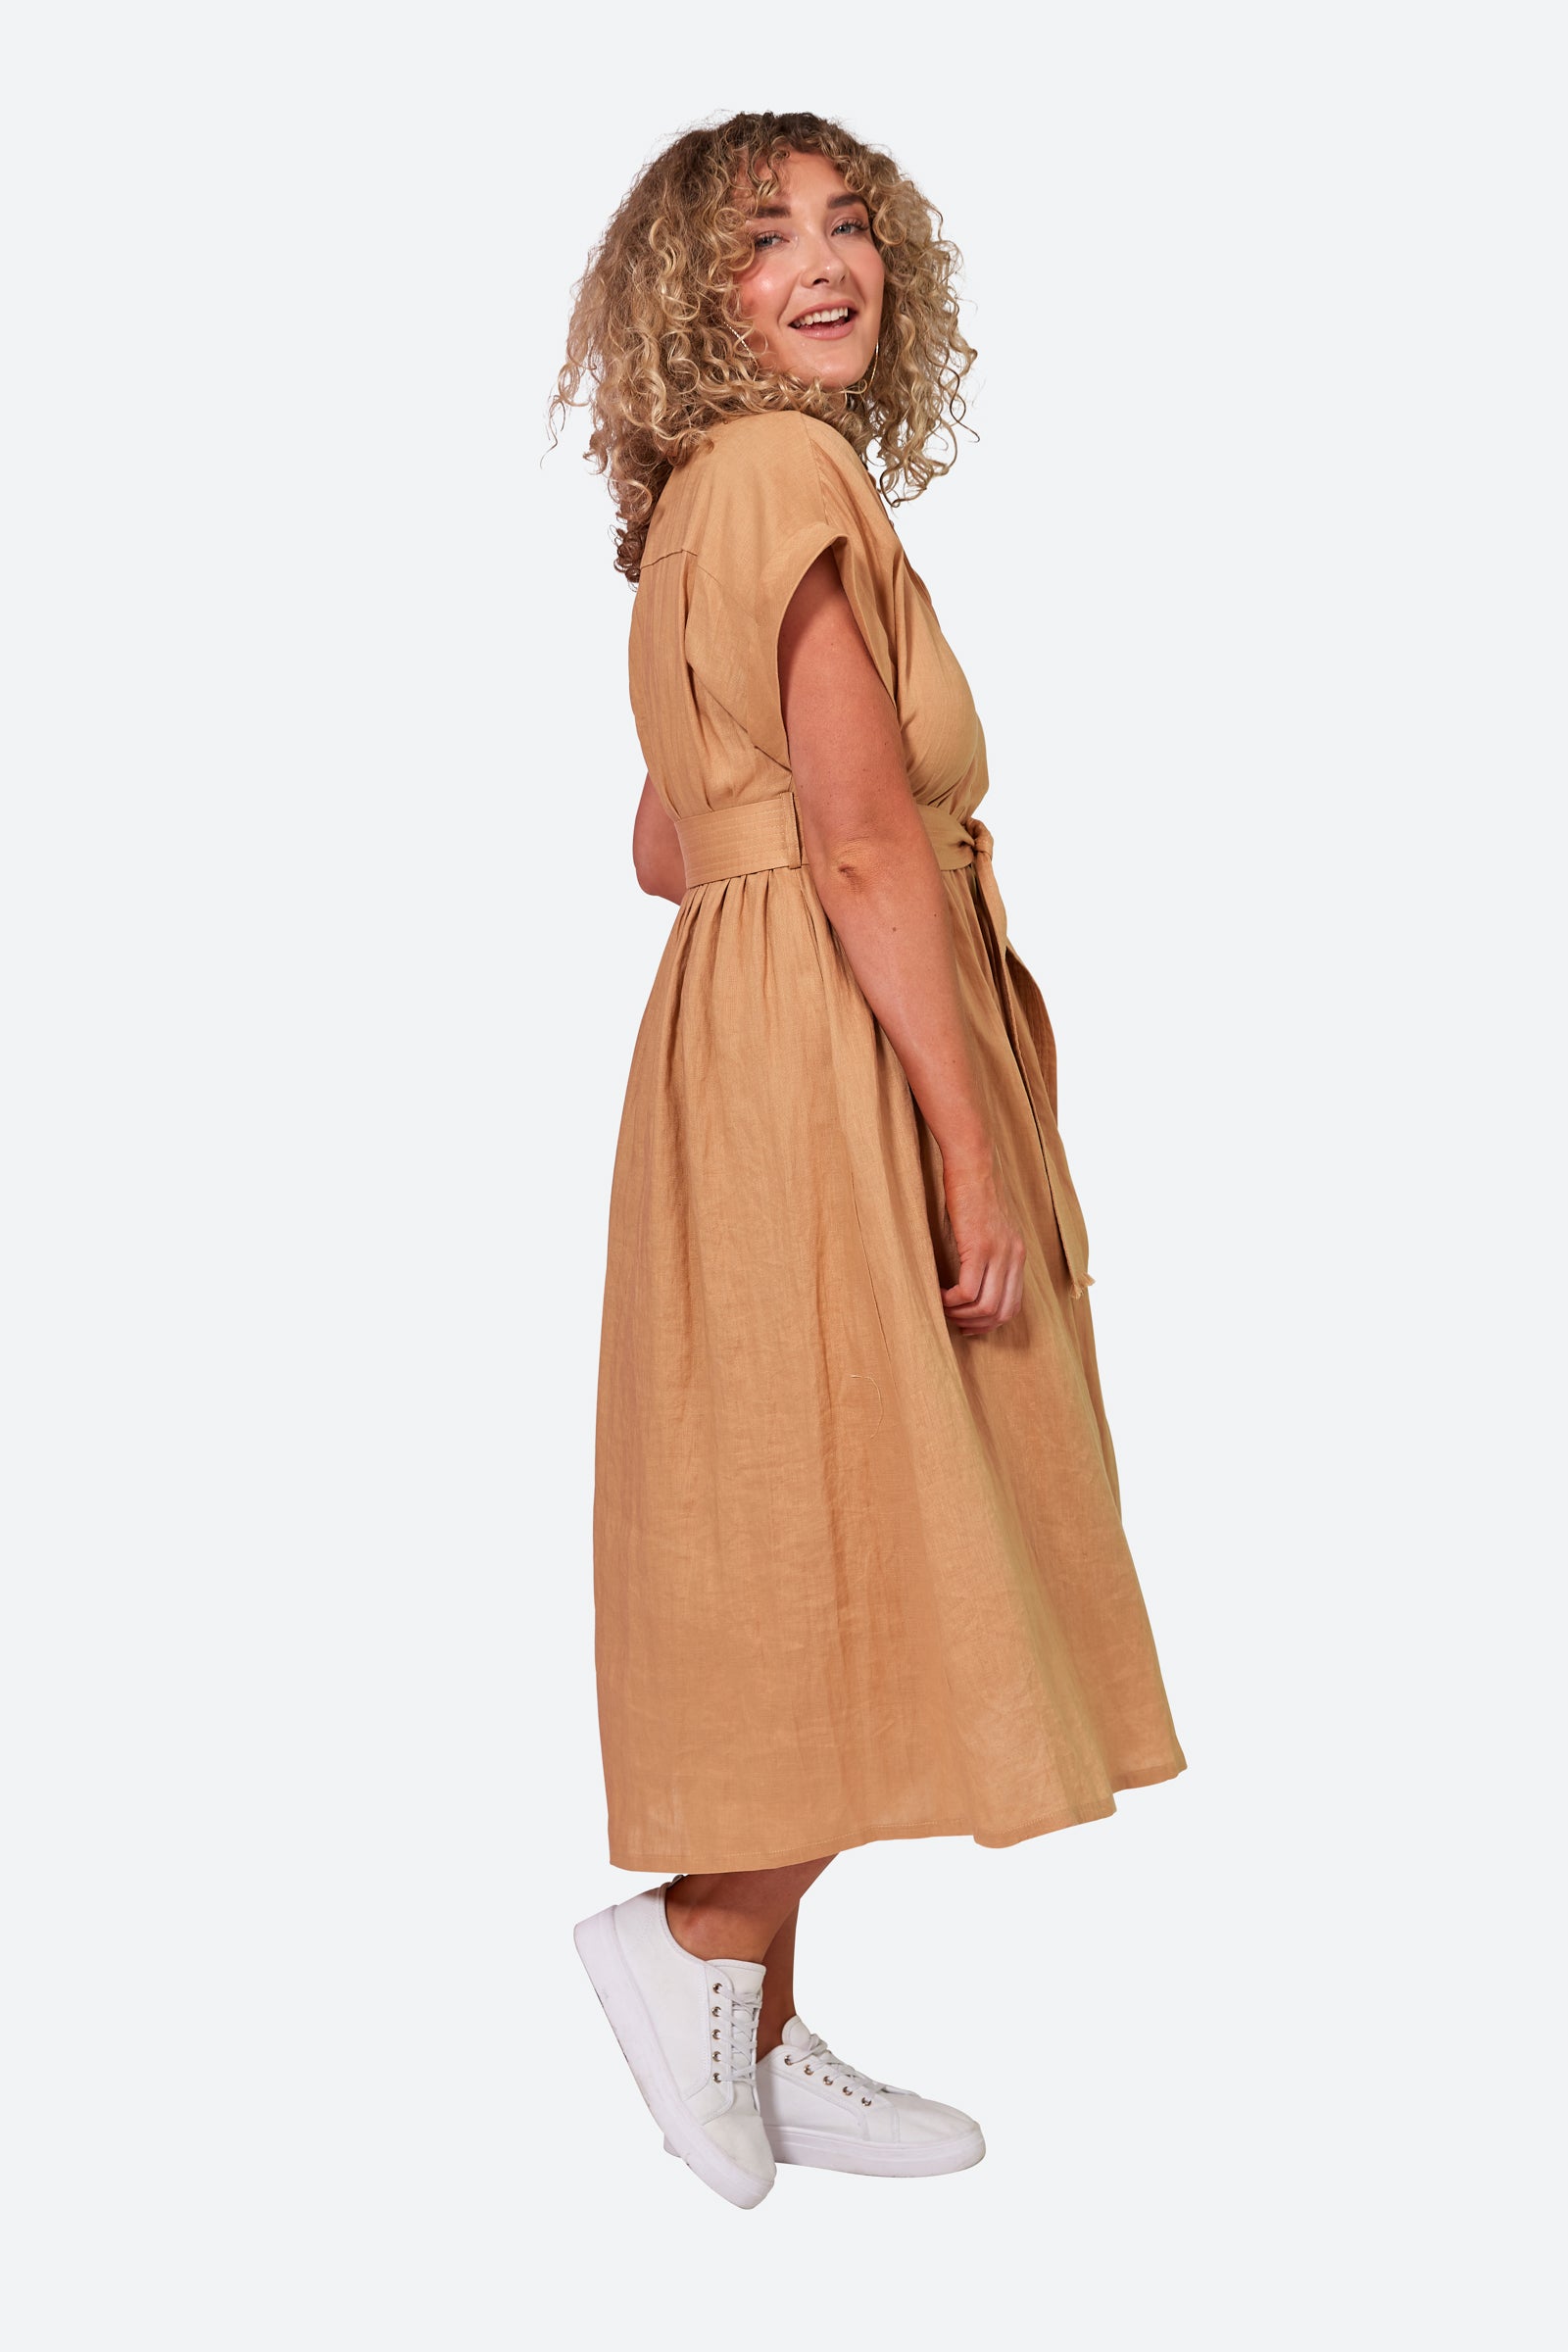 La Vie Shirt Dress - Caramel - eb&ive Clothing - Shirt Dress Maxi Linen